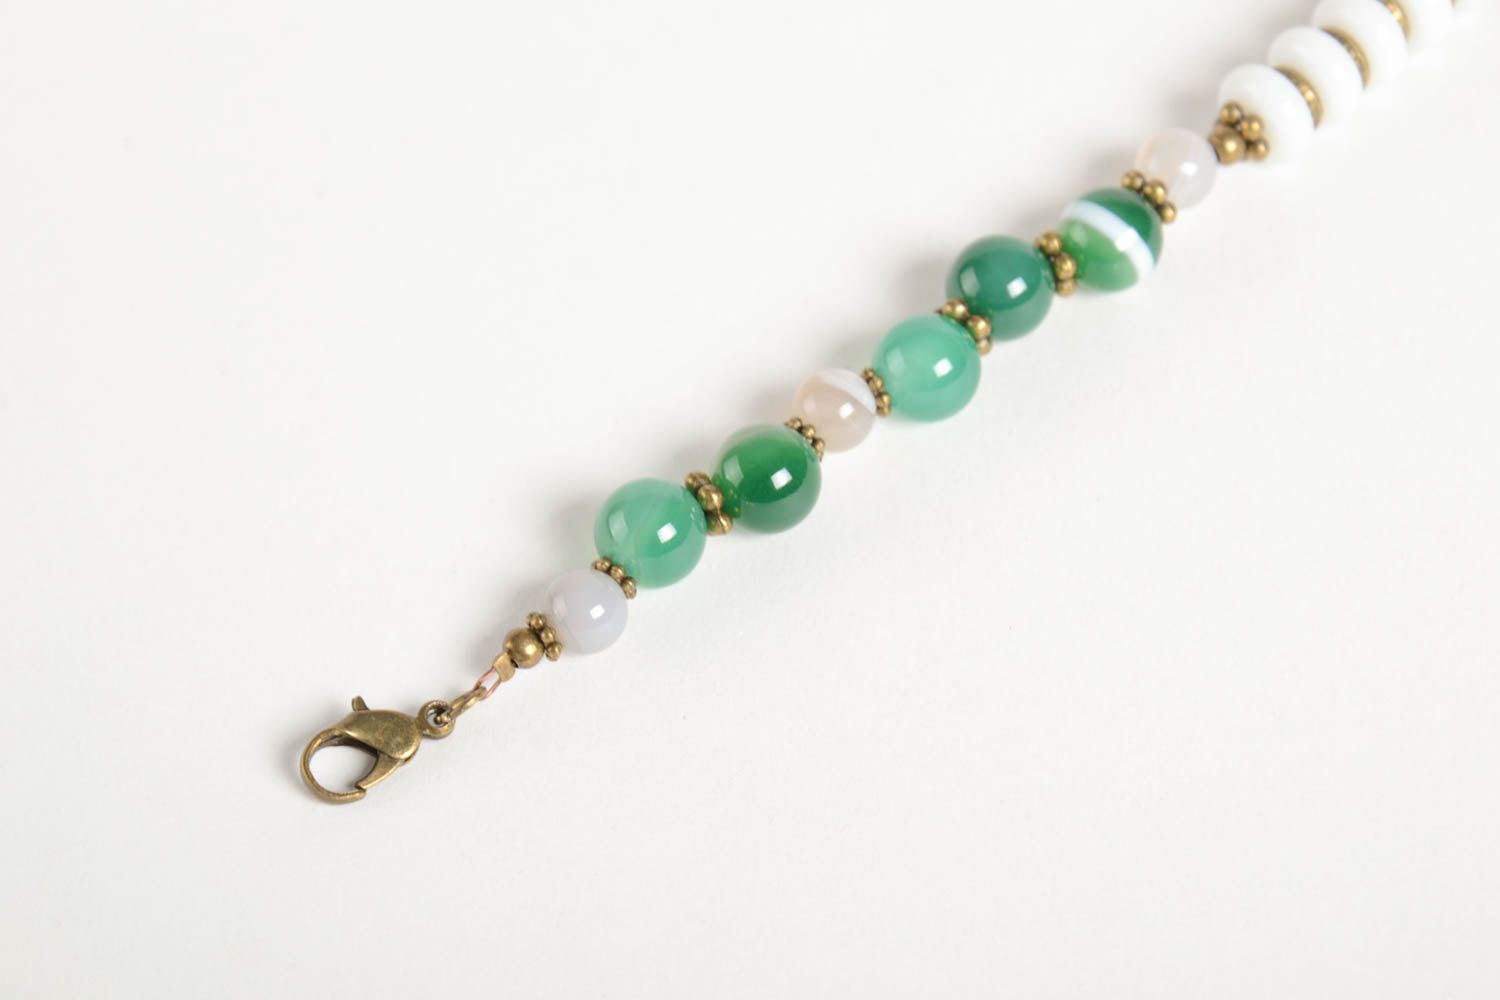 Beautiful handmade stone bracelet artisan jewelry designs gifts for her photo 4